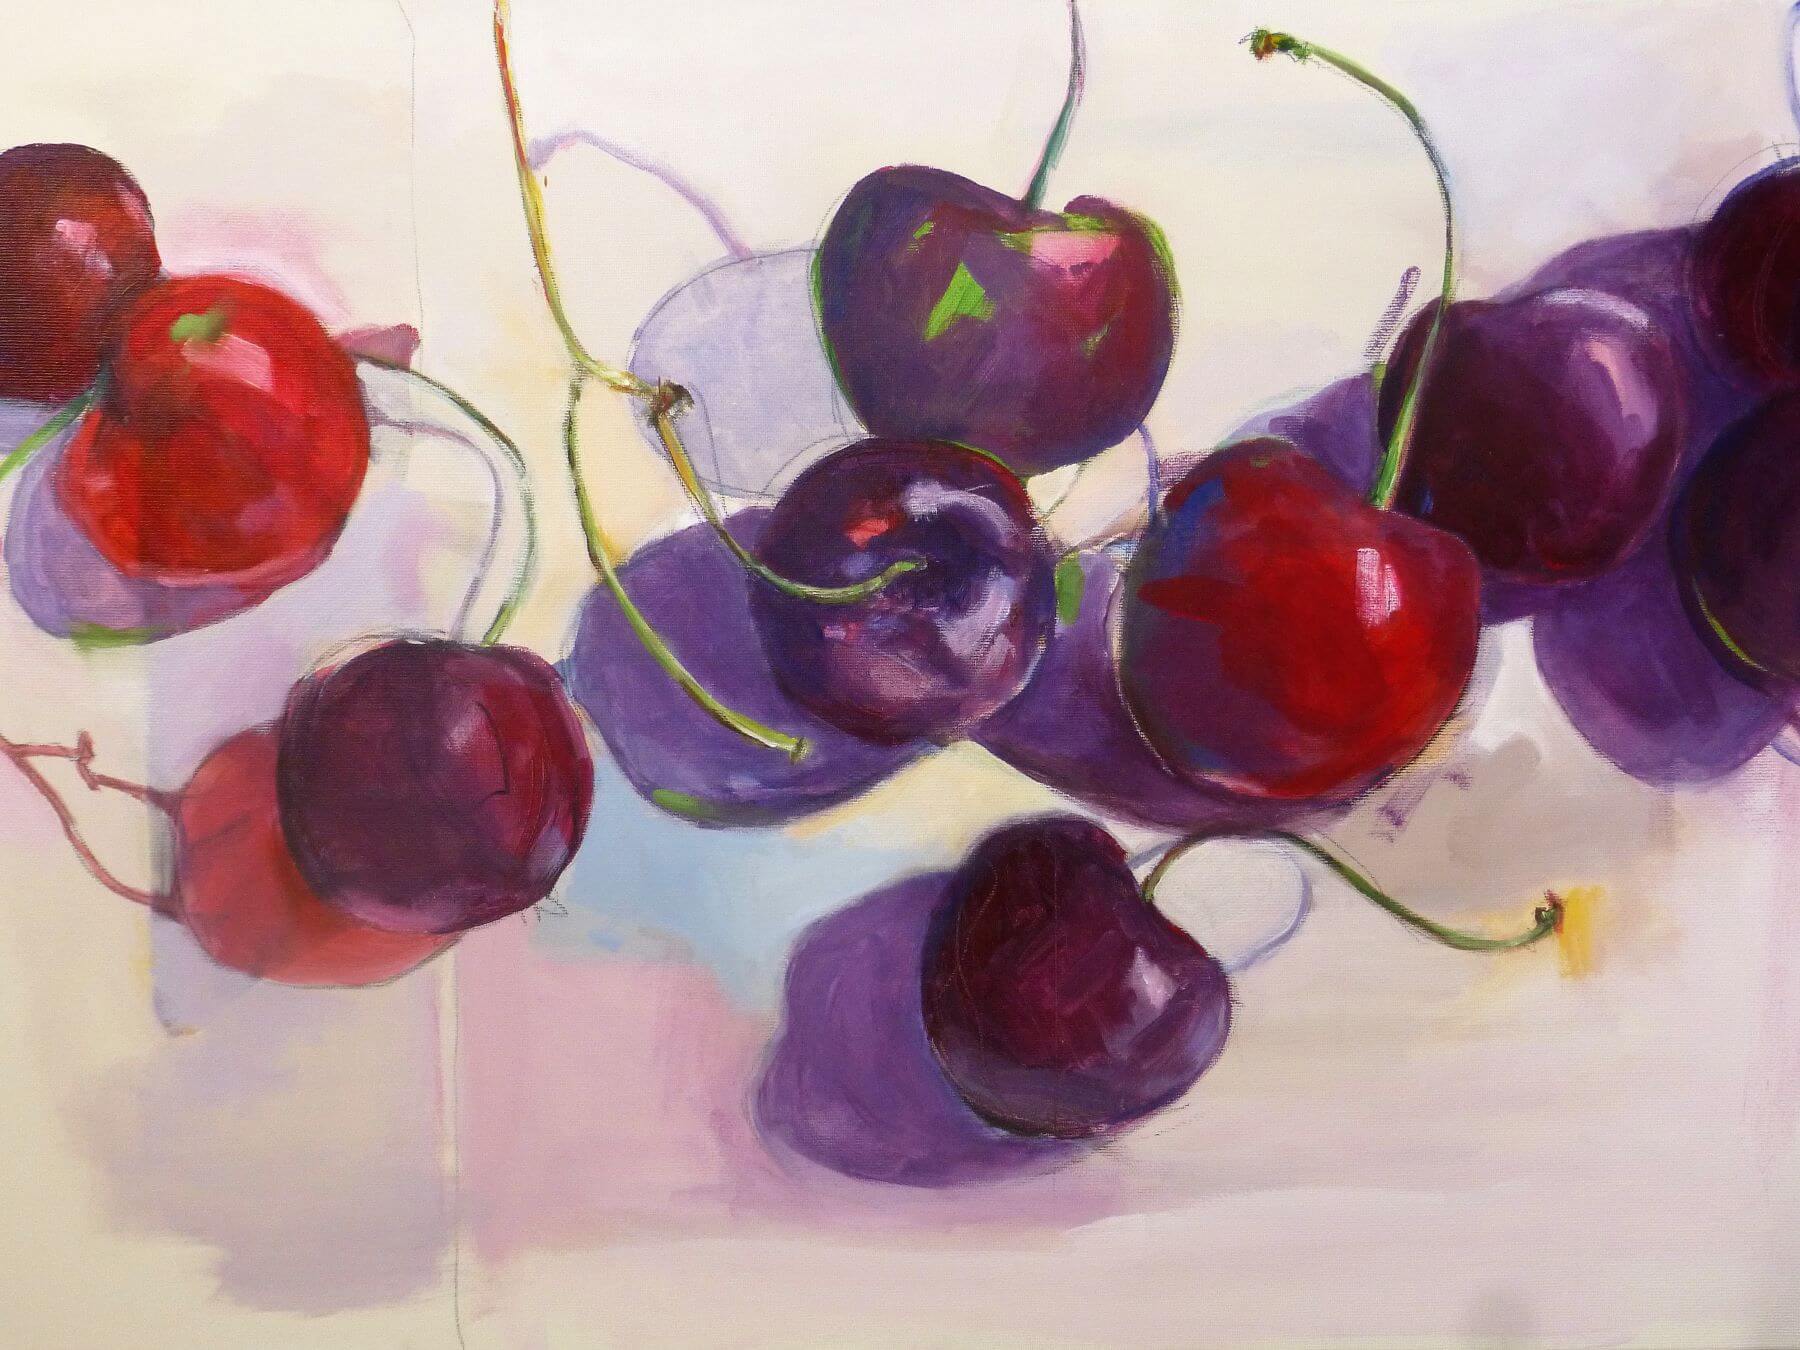 Cherries Painting Acrylic on Canvas by artist Neva Bergemann